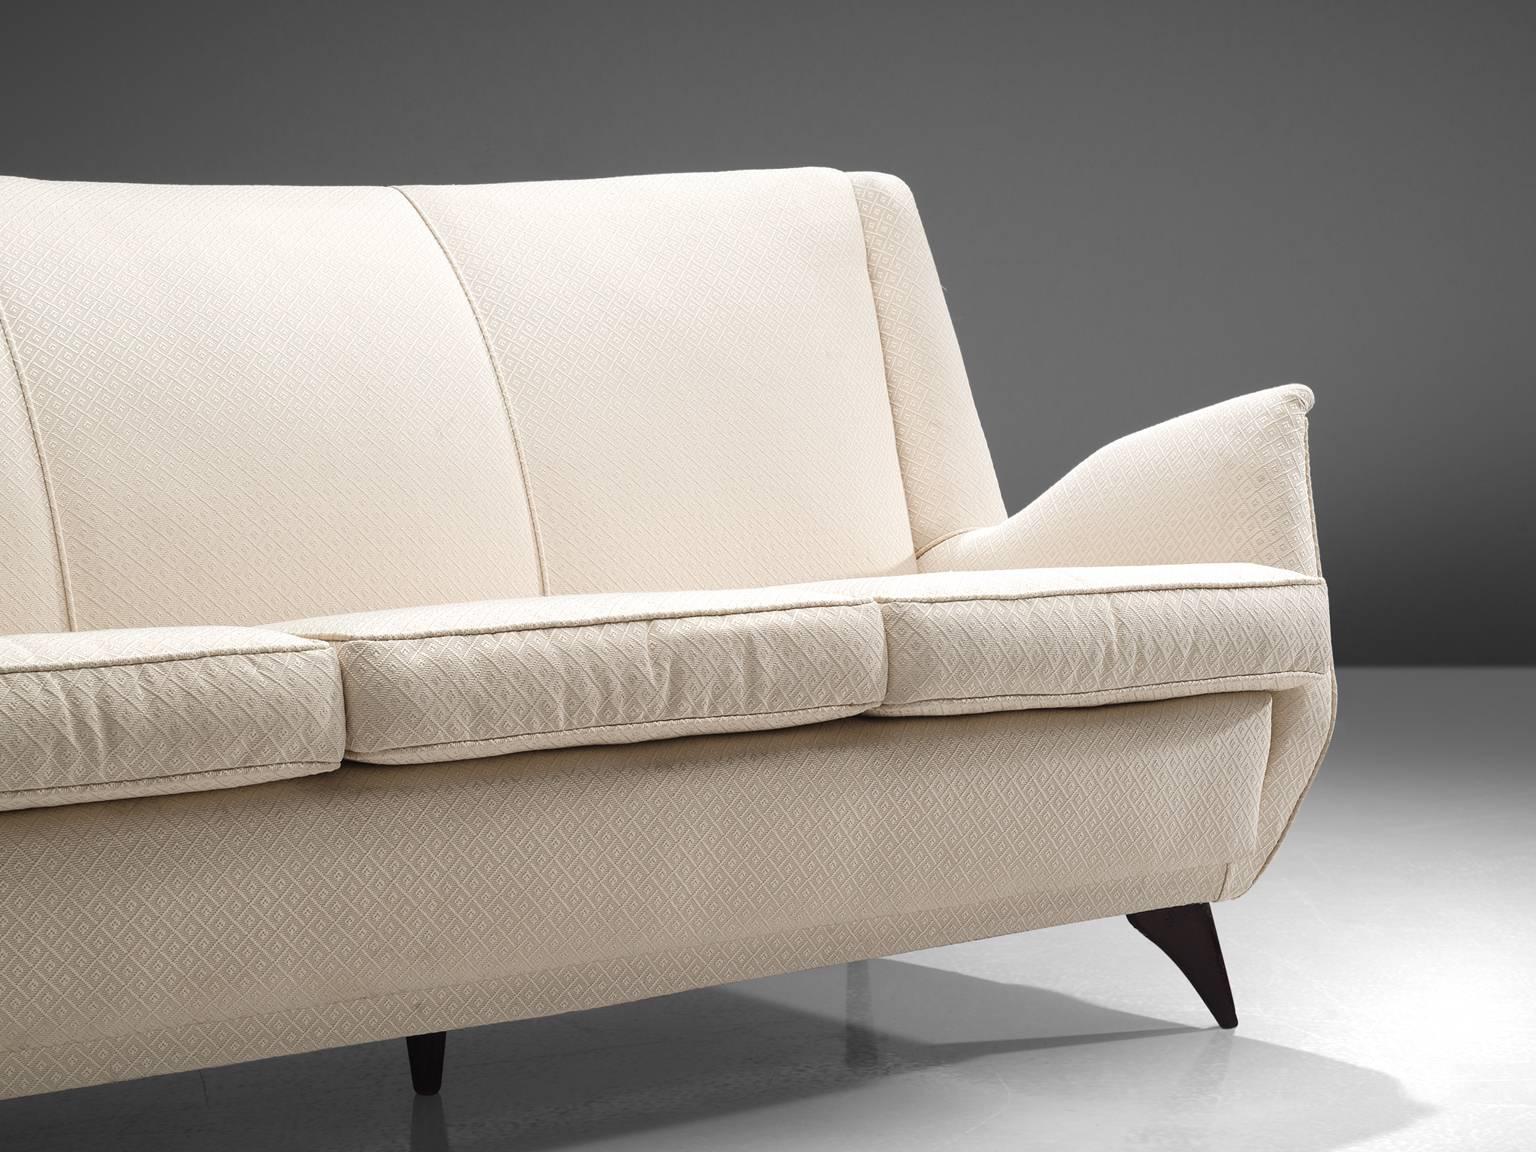 Mid-20th Century Italian Sofa in White Fabric, 1950s